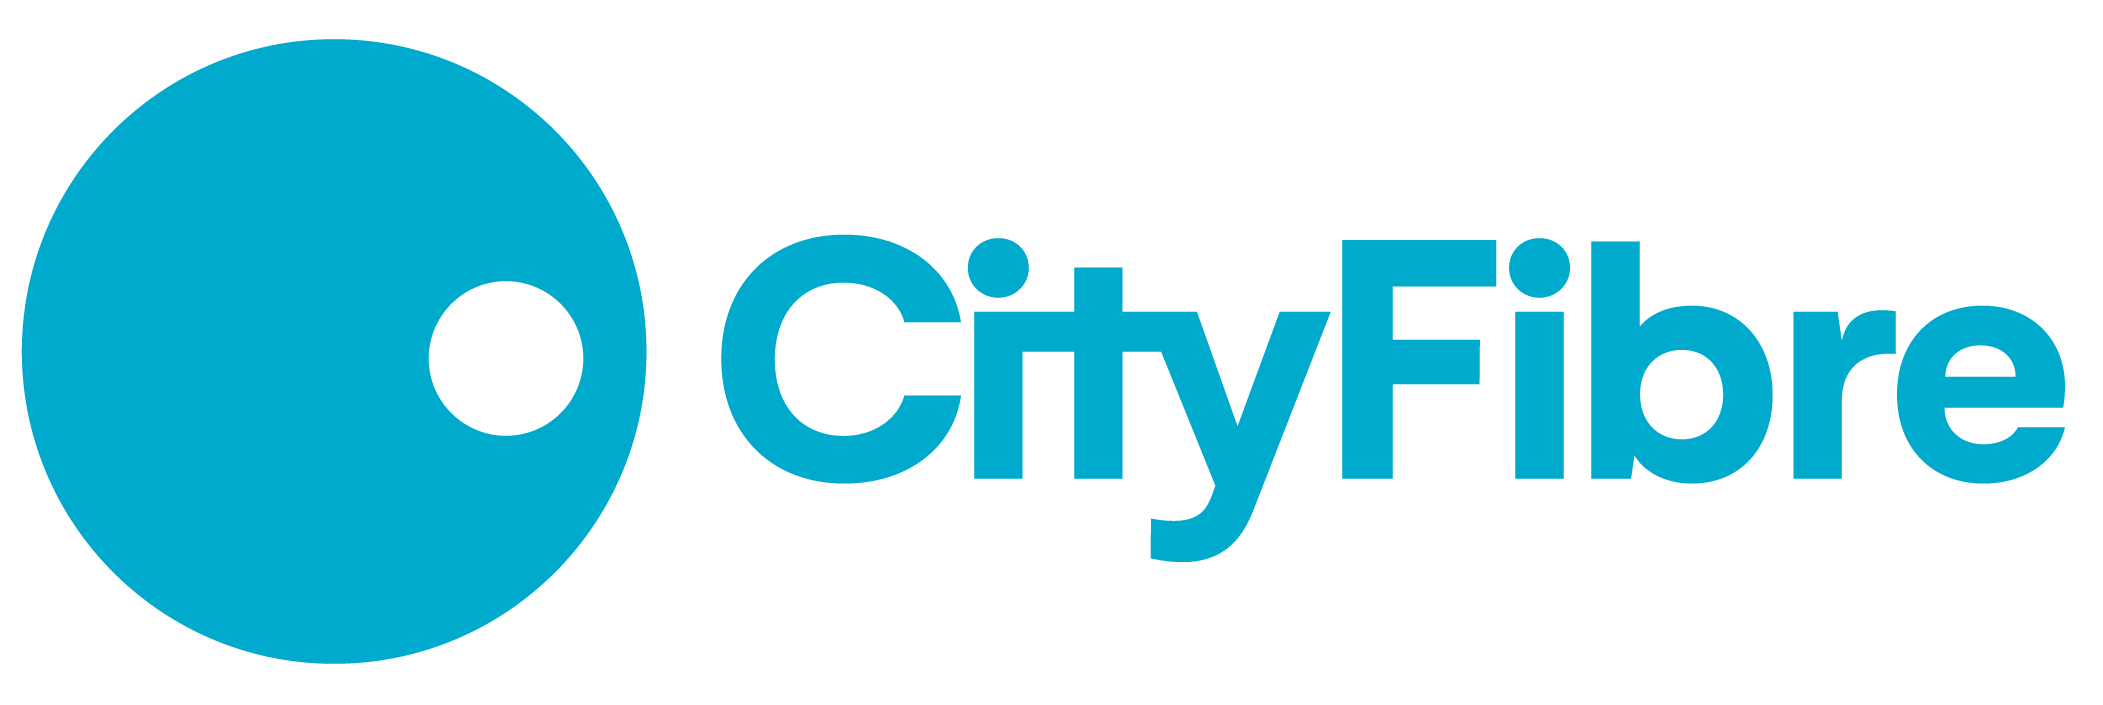 CityFibre Leased Line Provider